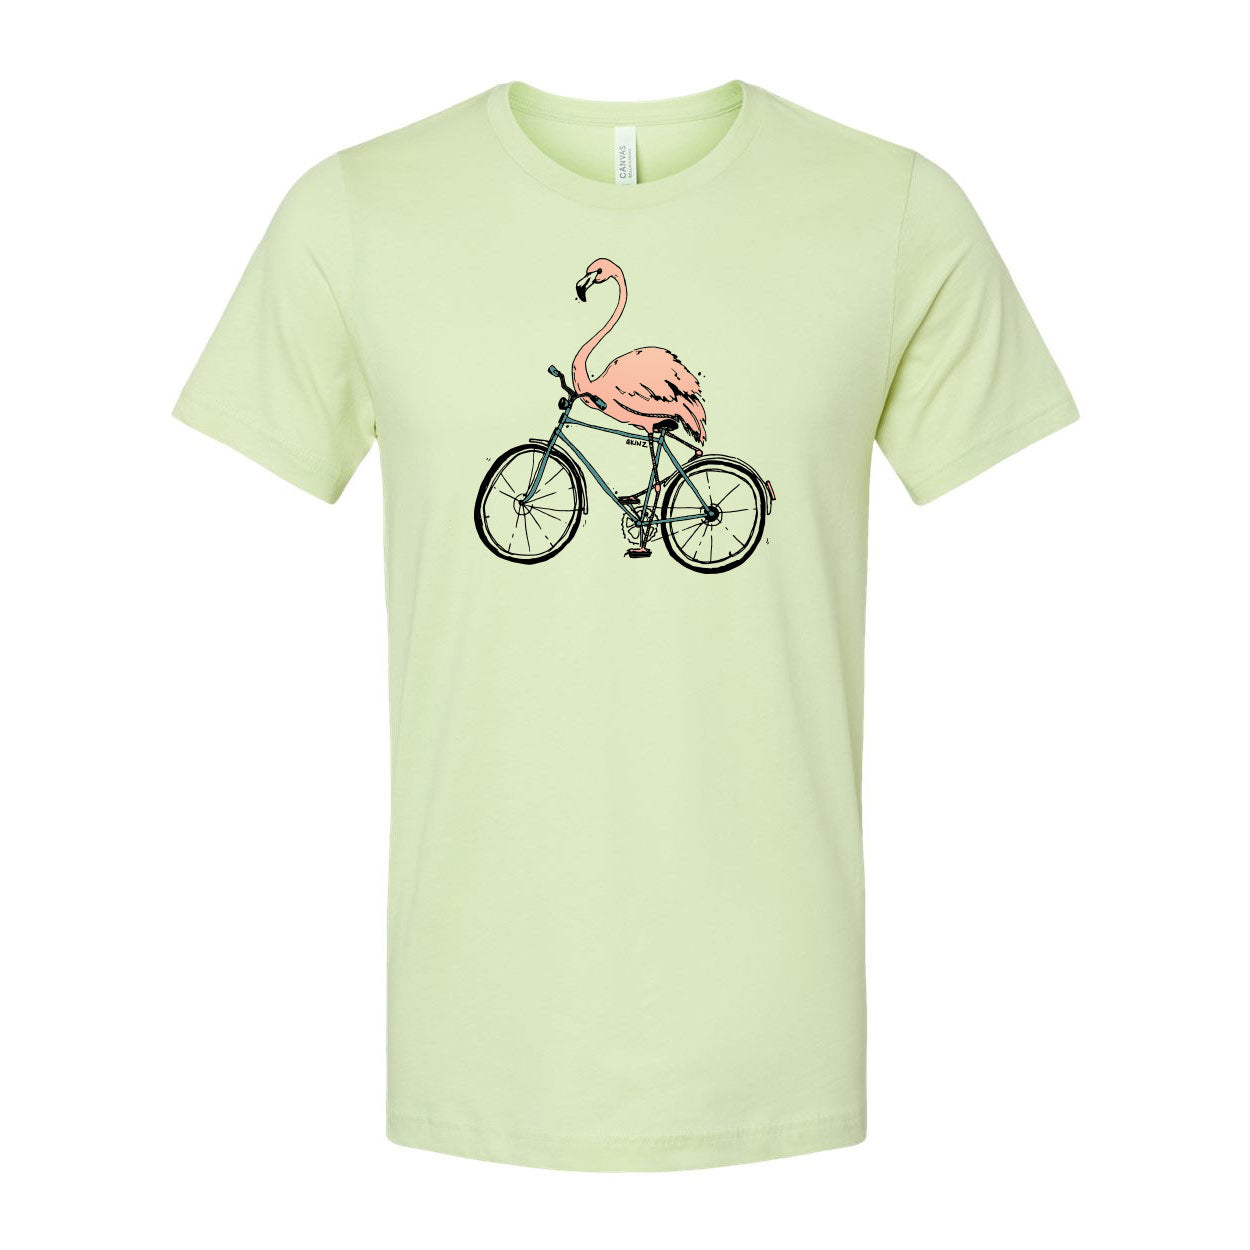 ride-my-bike-with-no-handlebars-flamingo-spring-green-tee.jpg